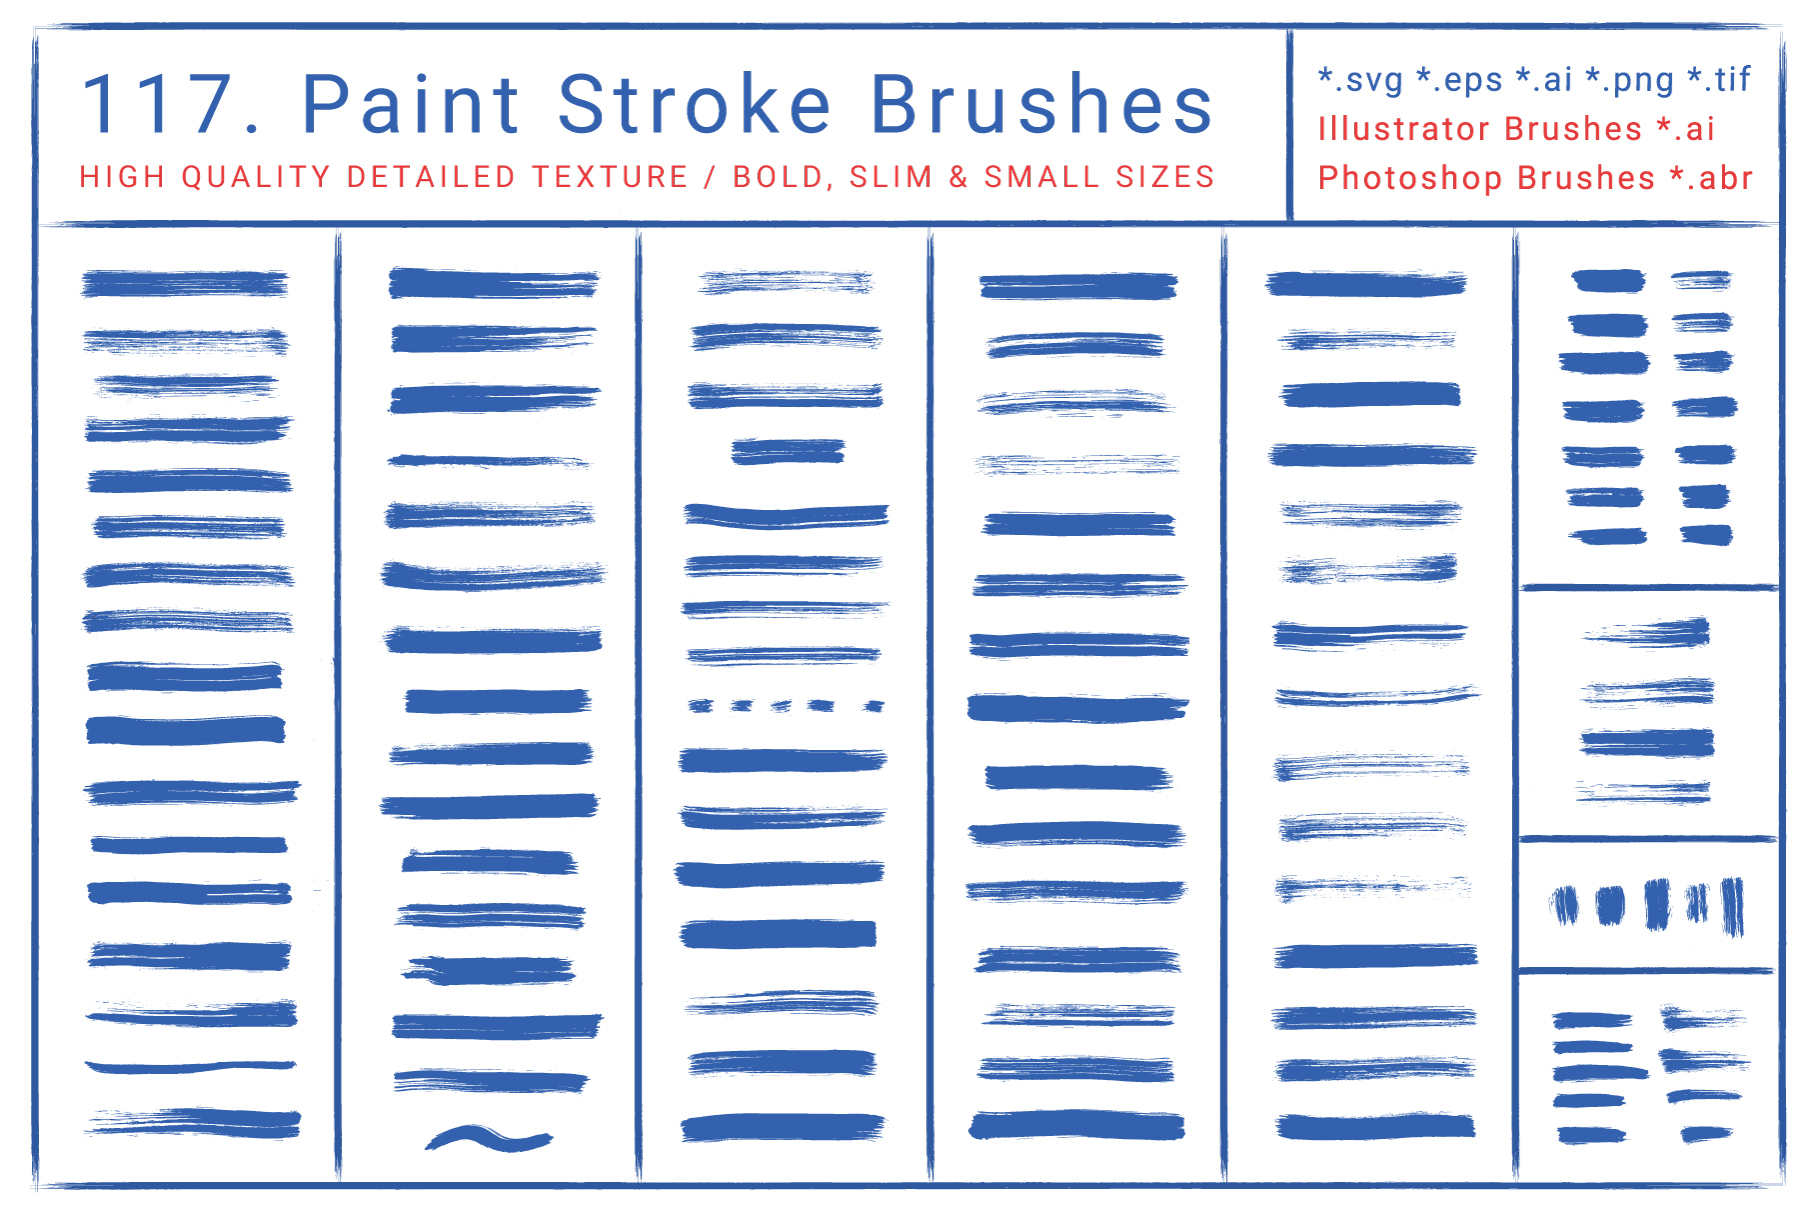 paint brush download illustrator